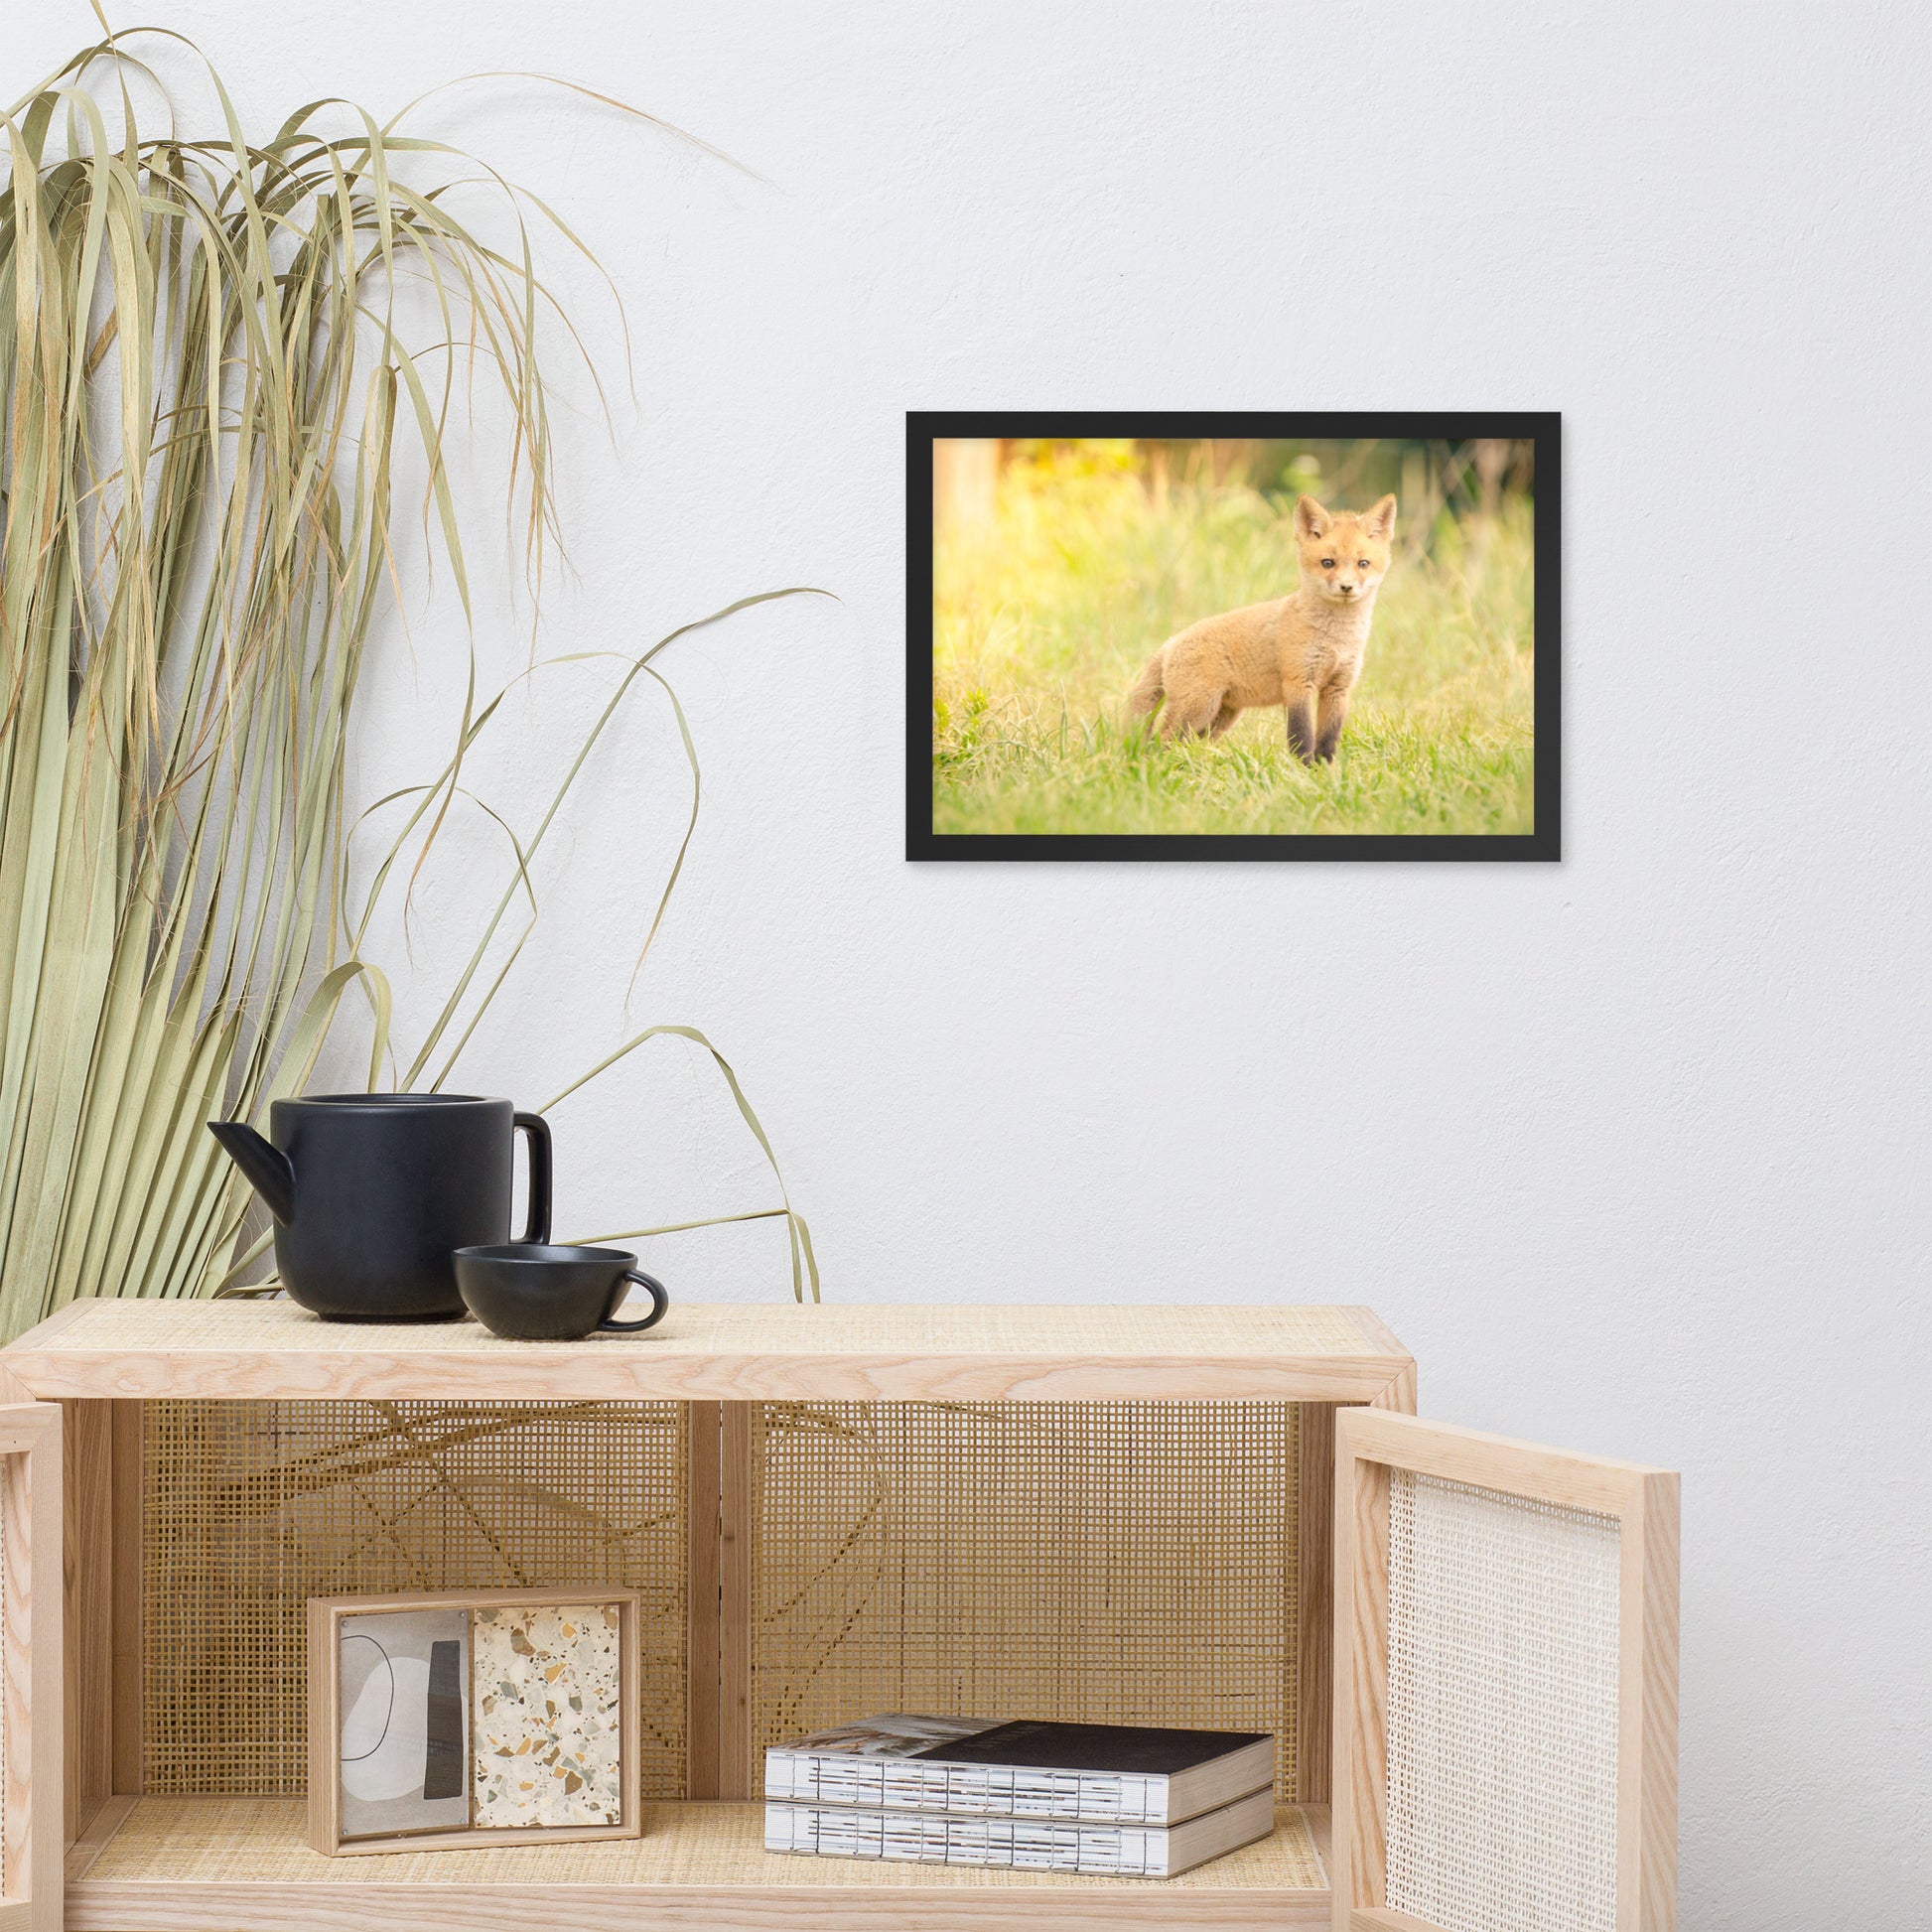 Framed Nursery Prints: Baby Red Fox in the Sun - Animal / Wildlife / Nature Artwork - Wall Decor - Framed Wall Art Print